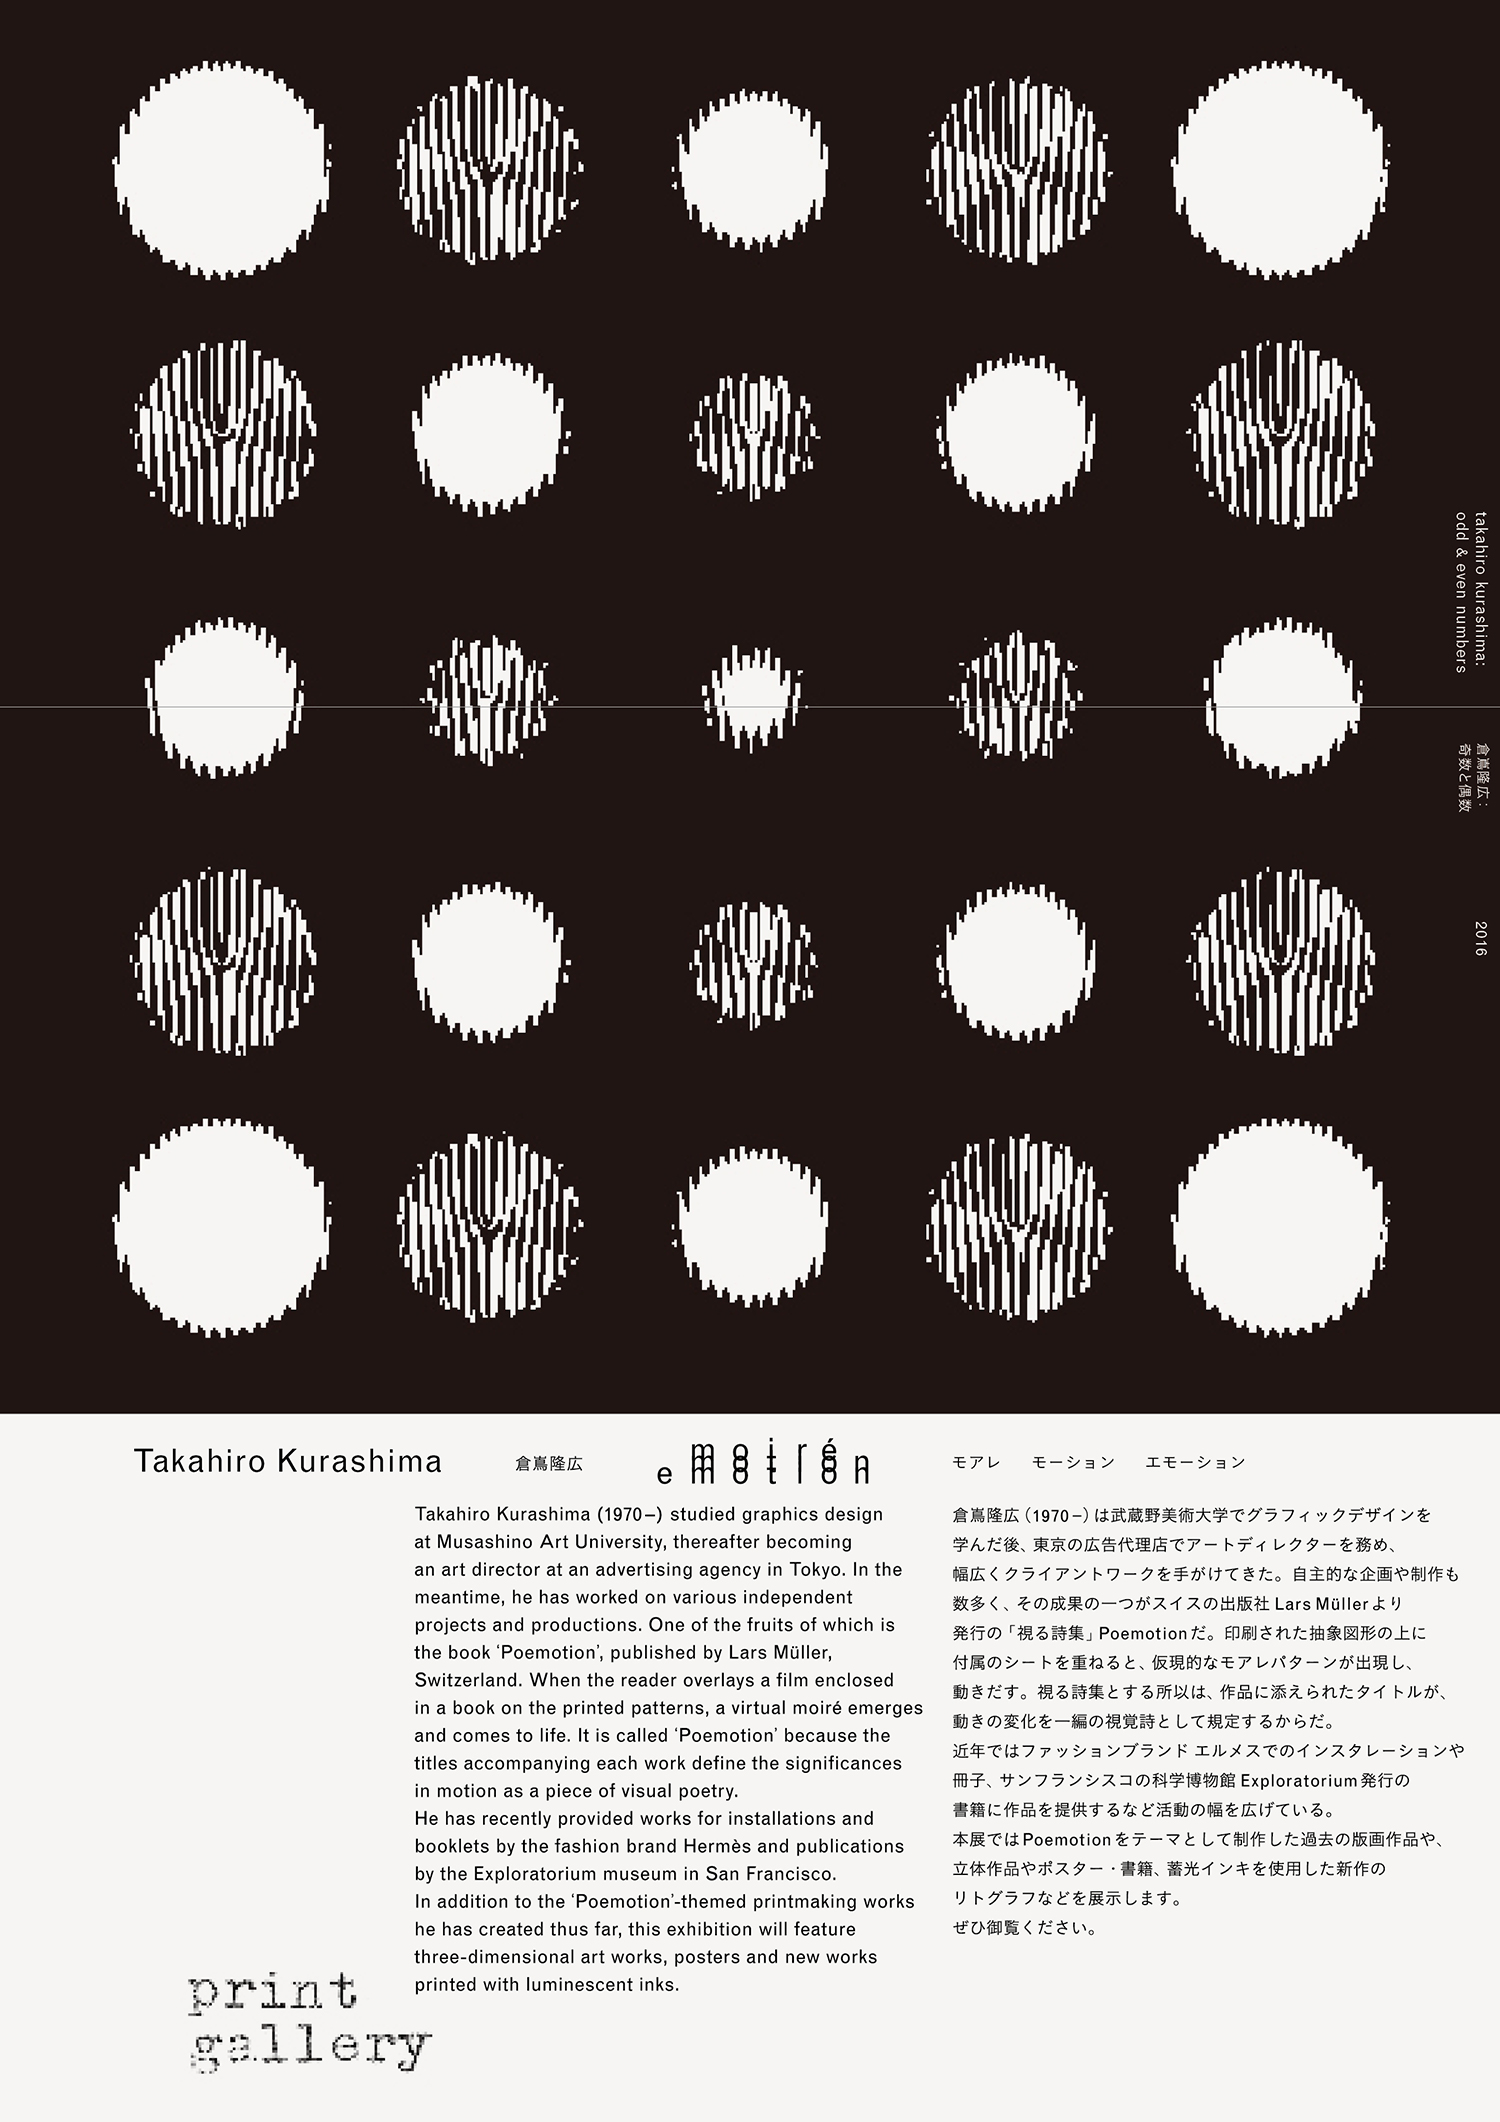 Takahiro Kurashima Exhibition at print gallery Tokyo. 倉嶌隆広「モアレ　モーション エモーション」展、プリントギャラリーにて